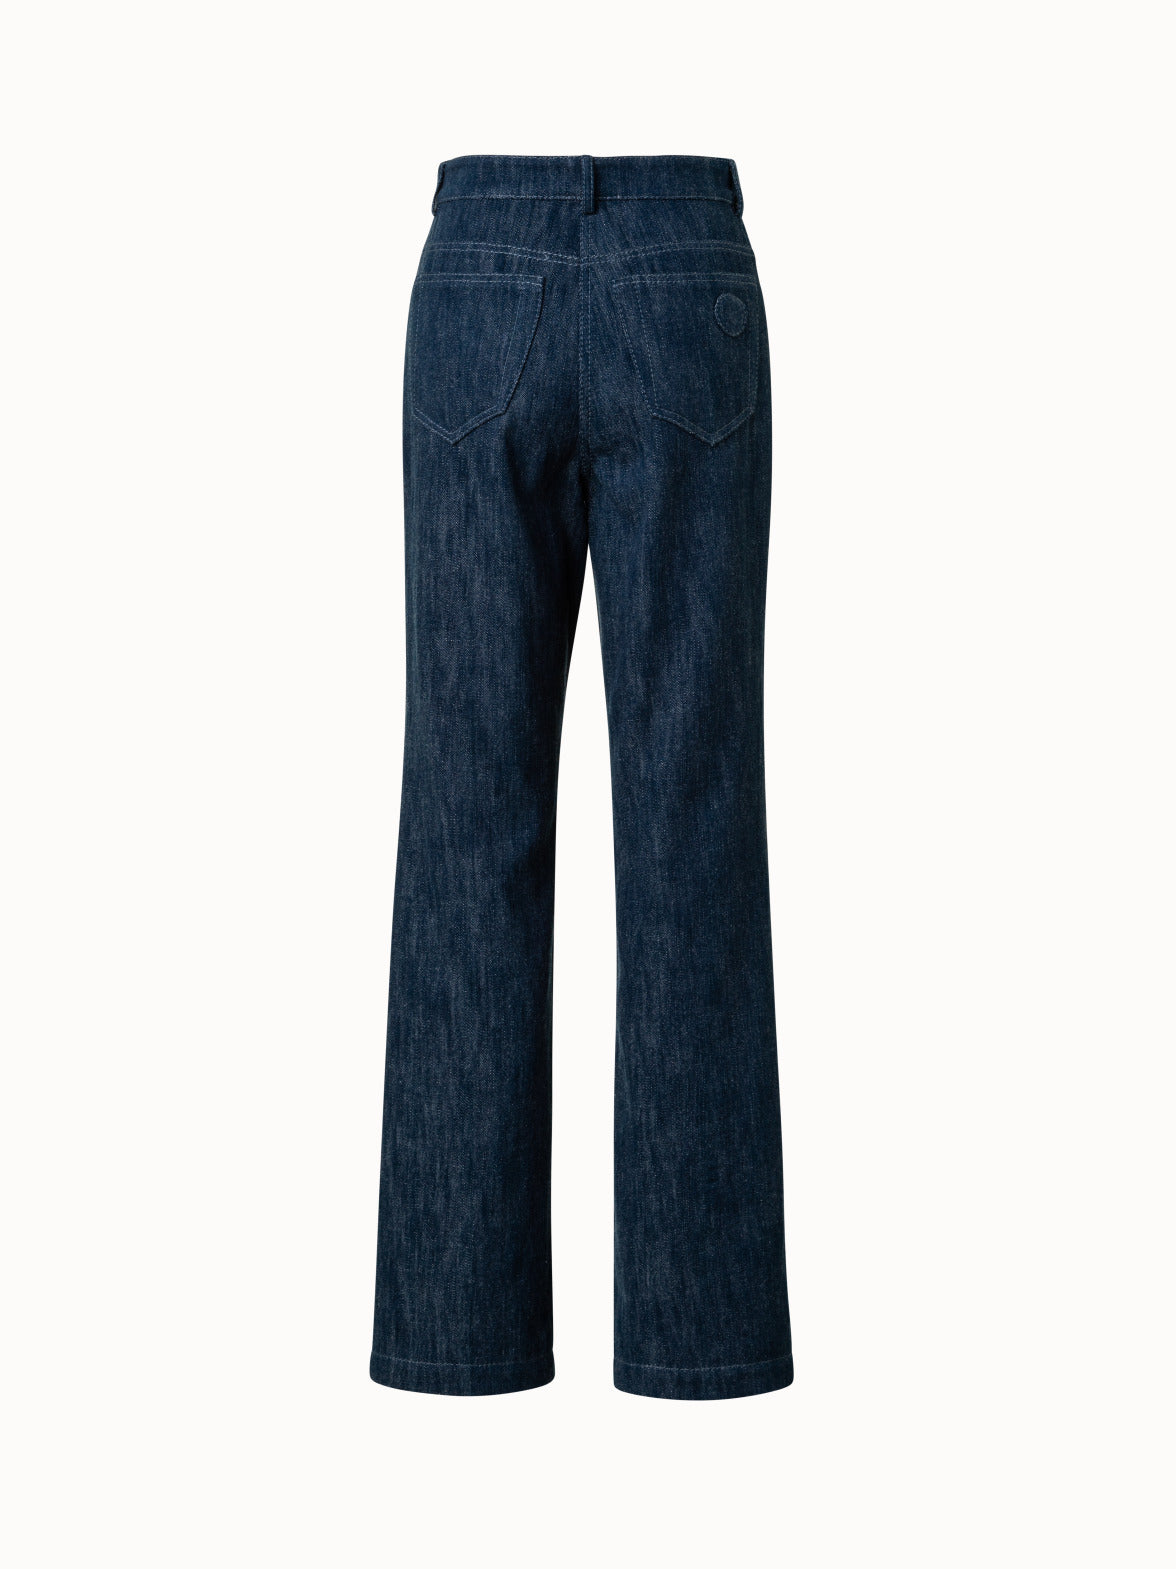 Grunt Denim Blue Slim Fit Cotton Jeans | GRDJ-106 | Cilory.com